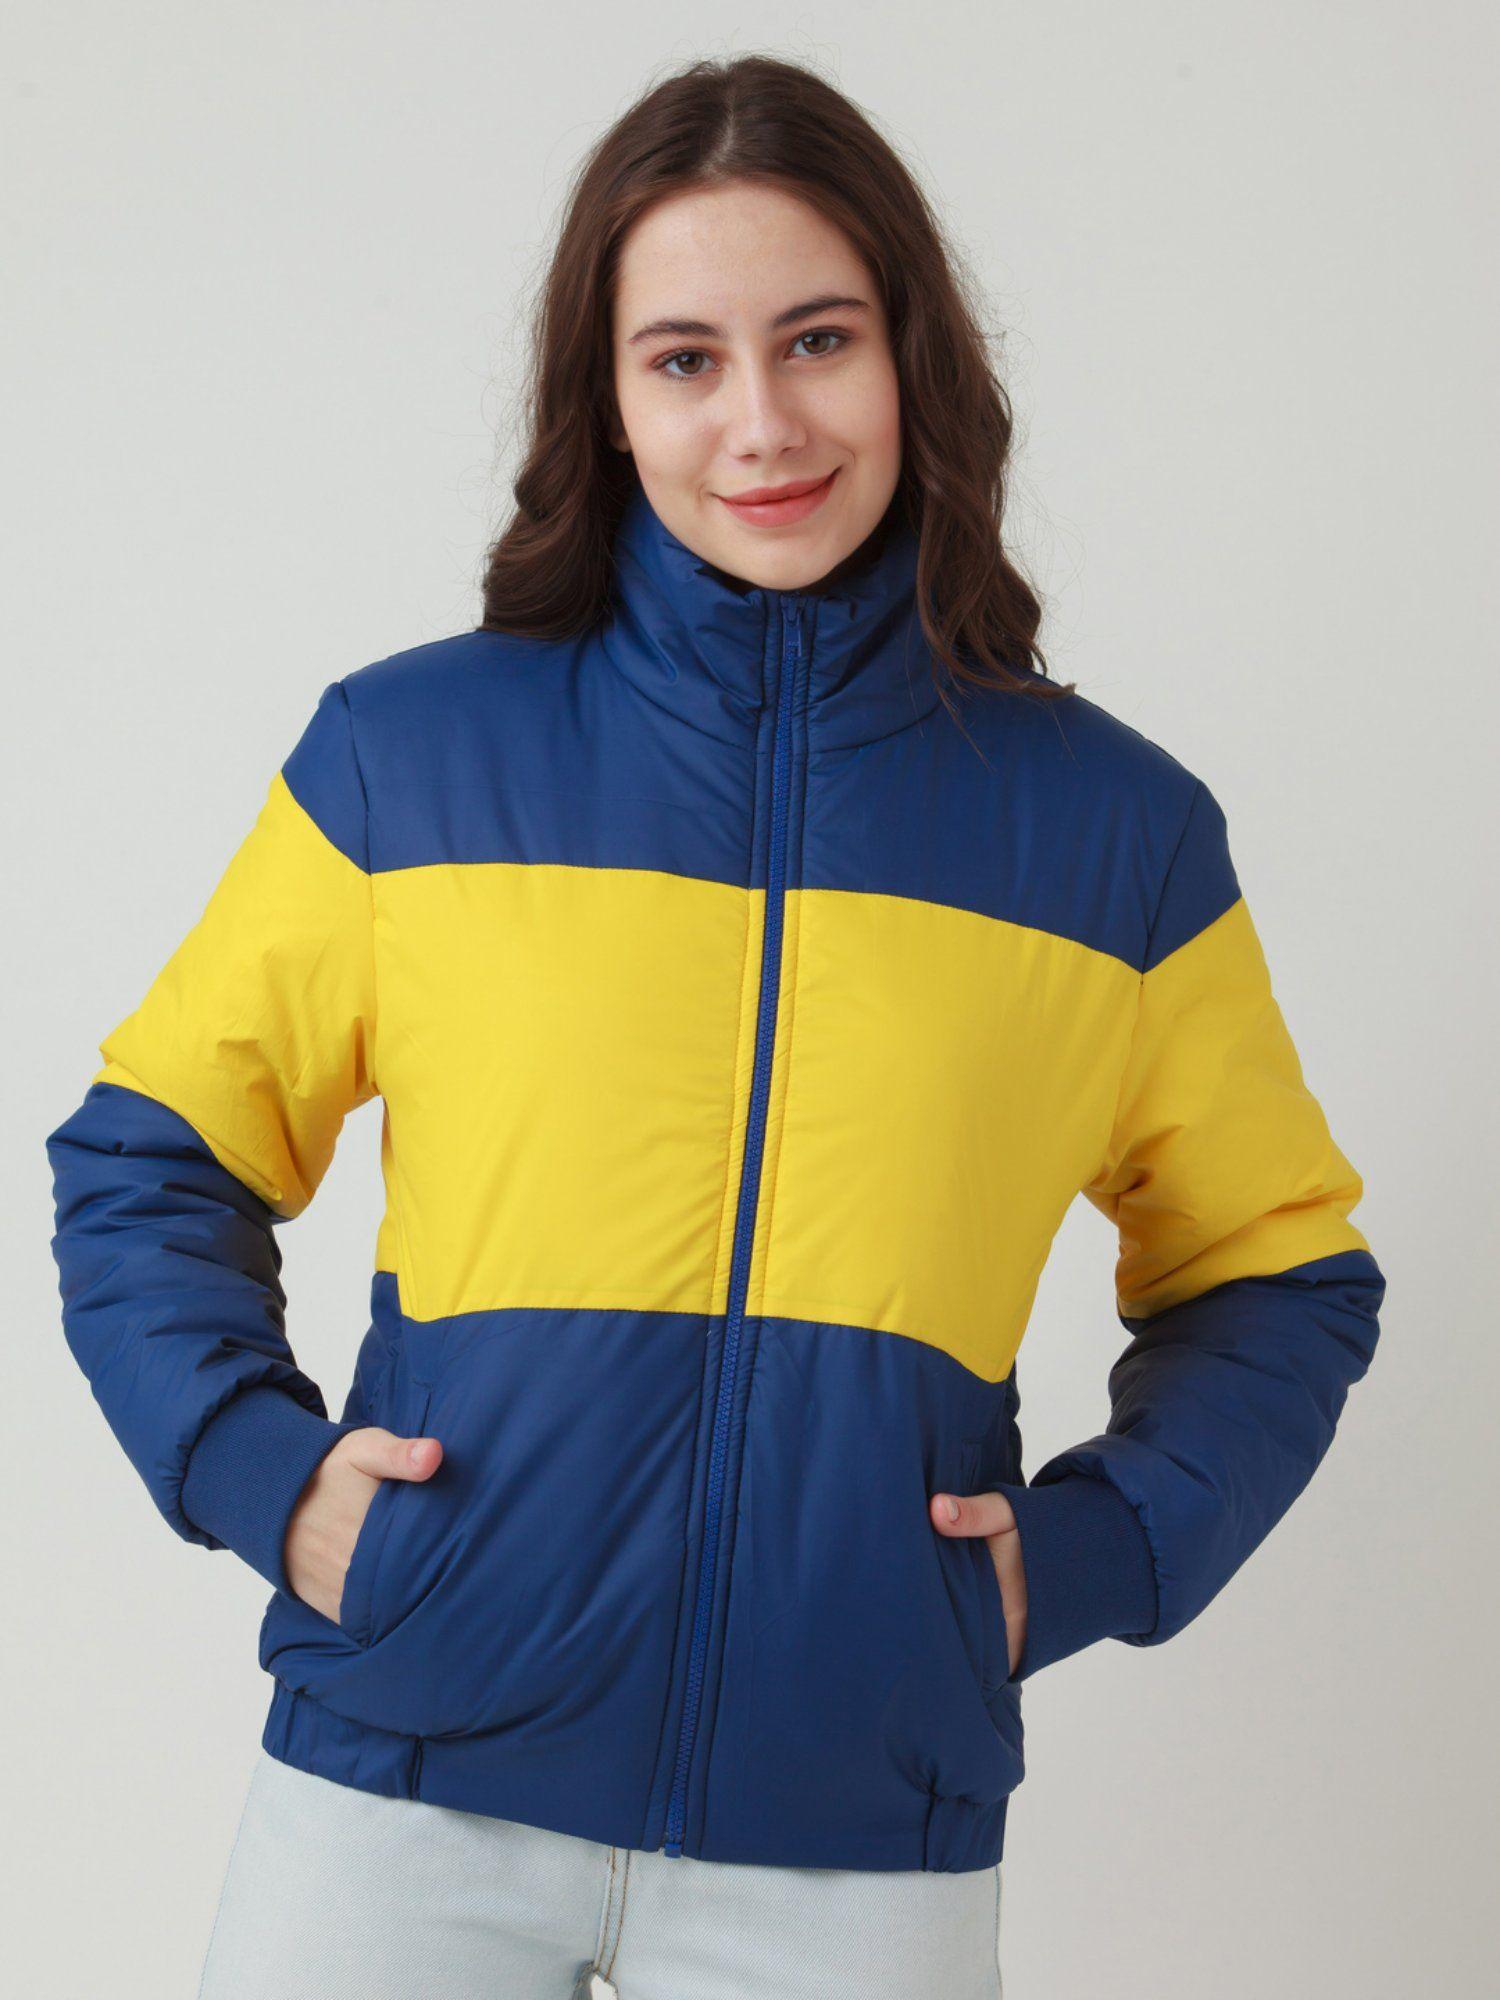 womens multi-color colorblock jacket